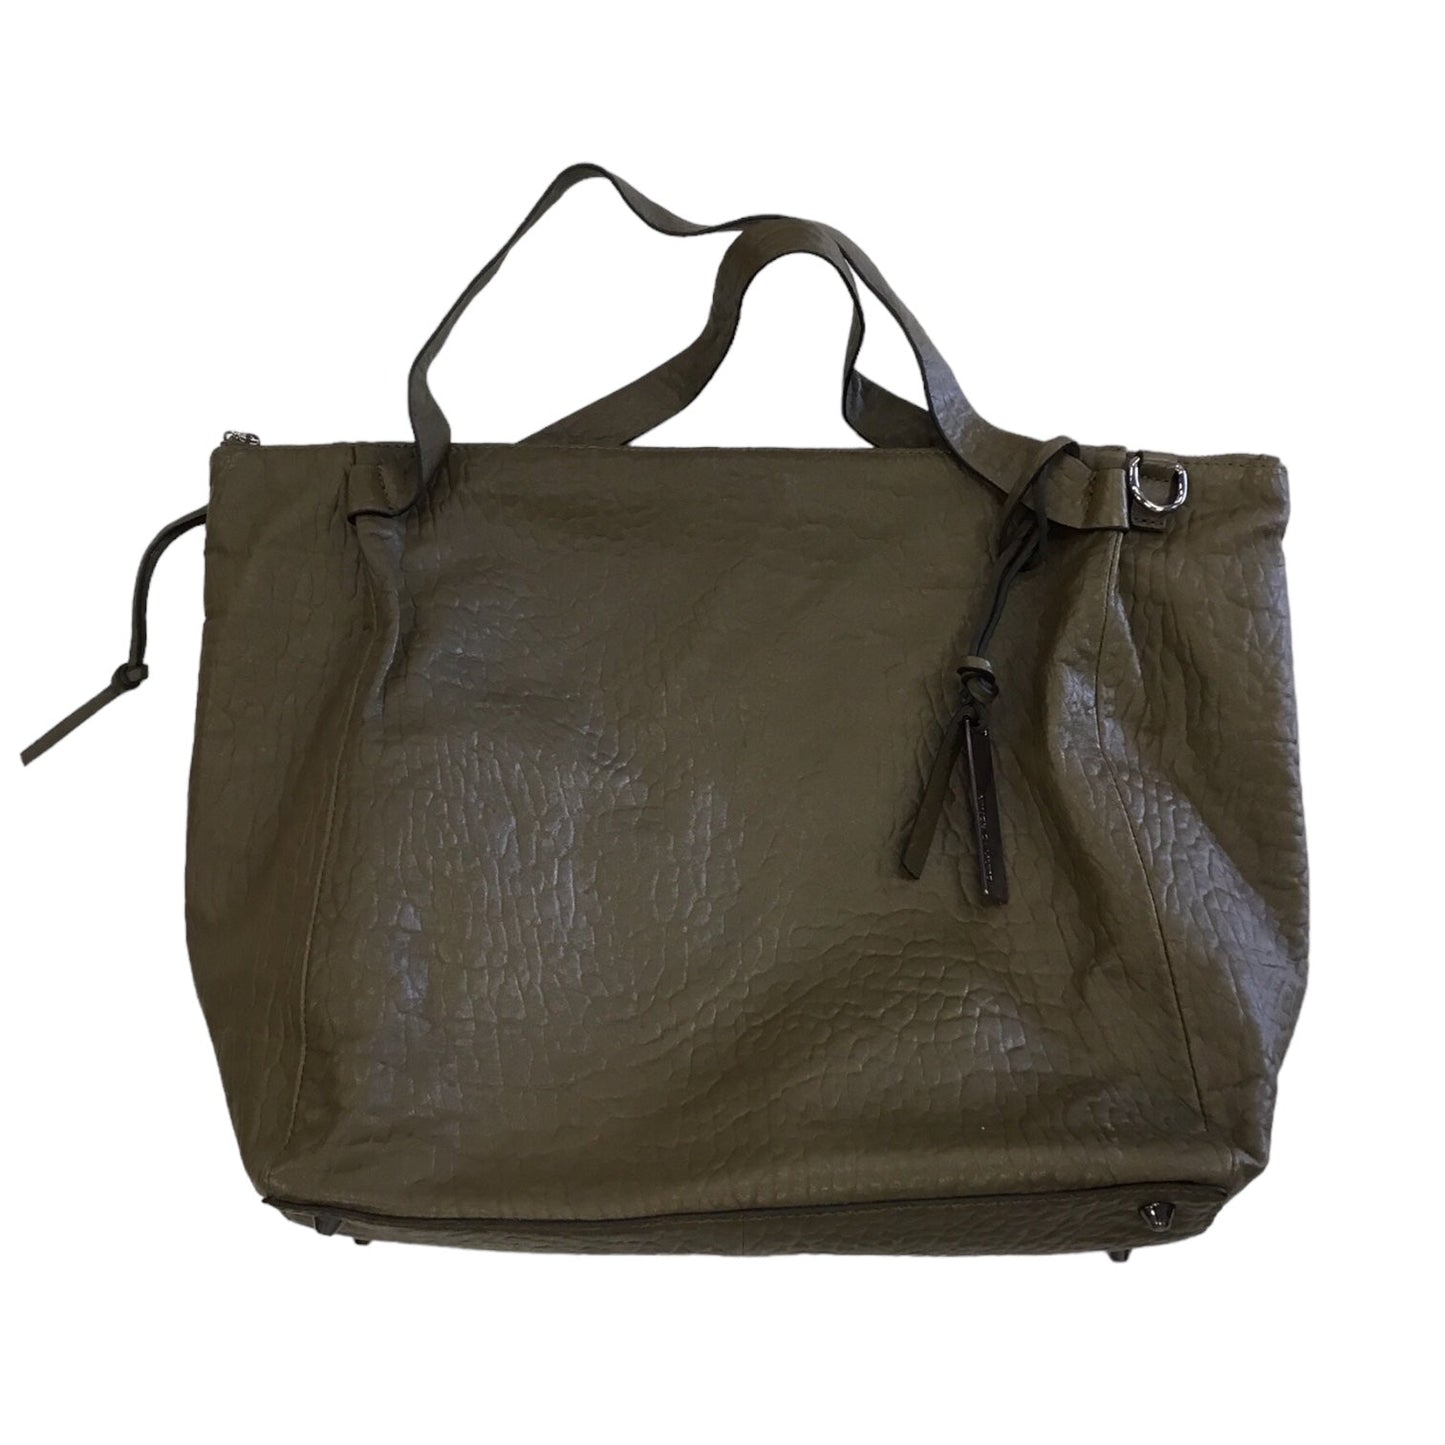 Handbag Vince Camuto, Size Medium